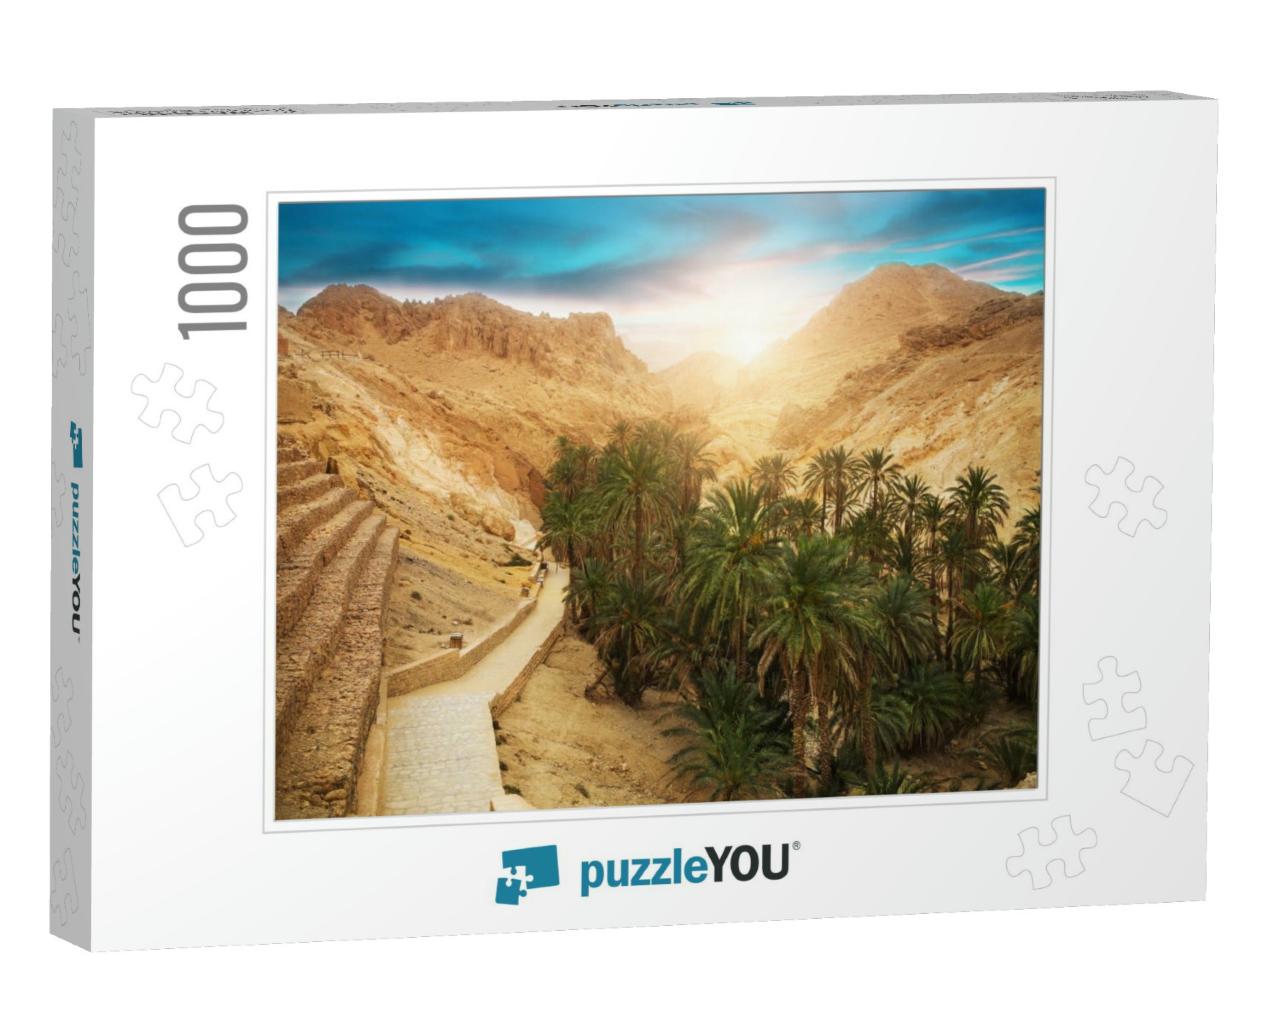 View of Mountain Oasis Chebika, Sahara Desert, Tunisia, A... Jigsaw Puzzle with 1000 pieces